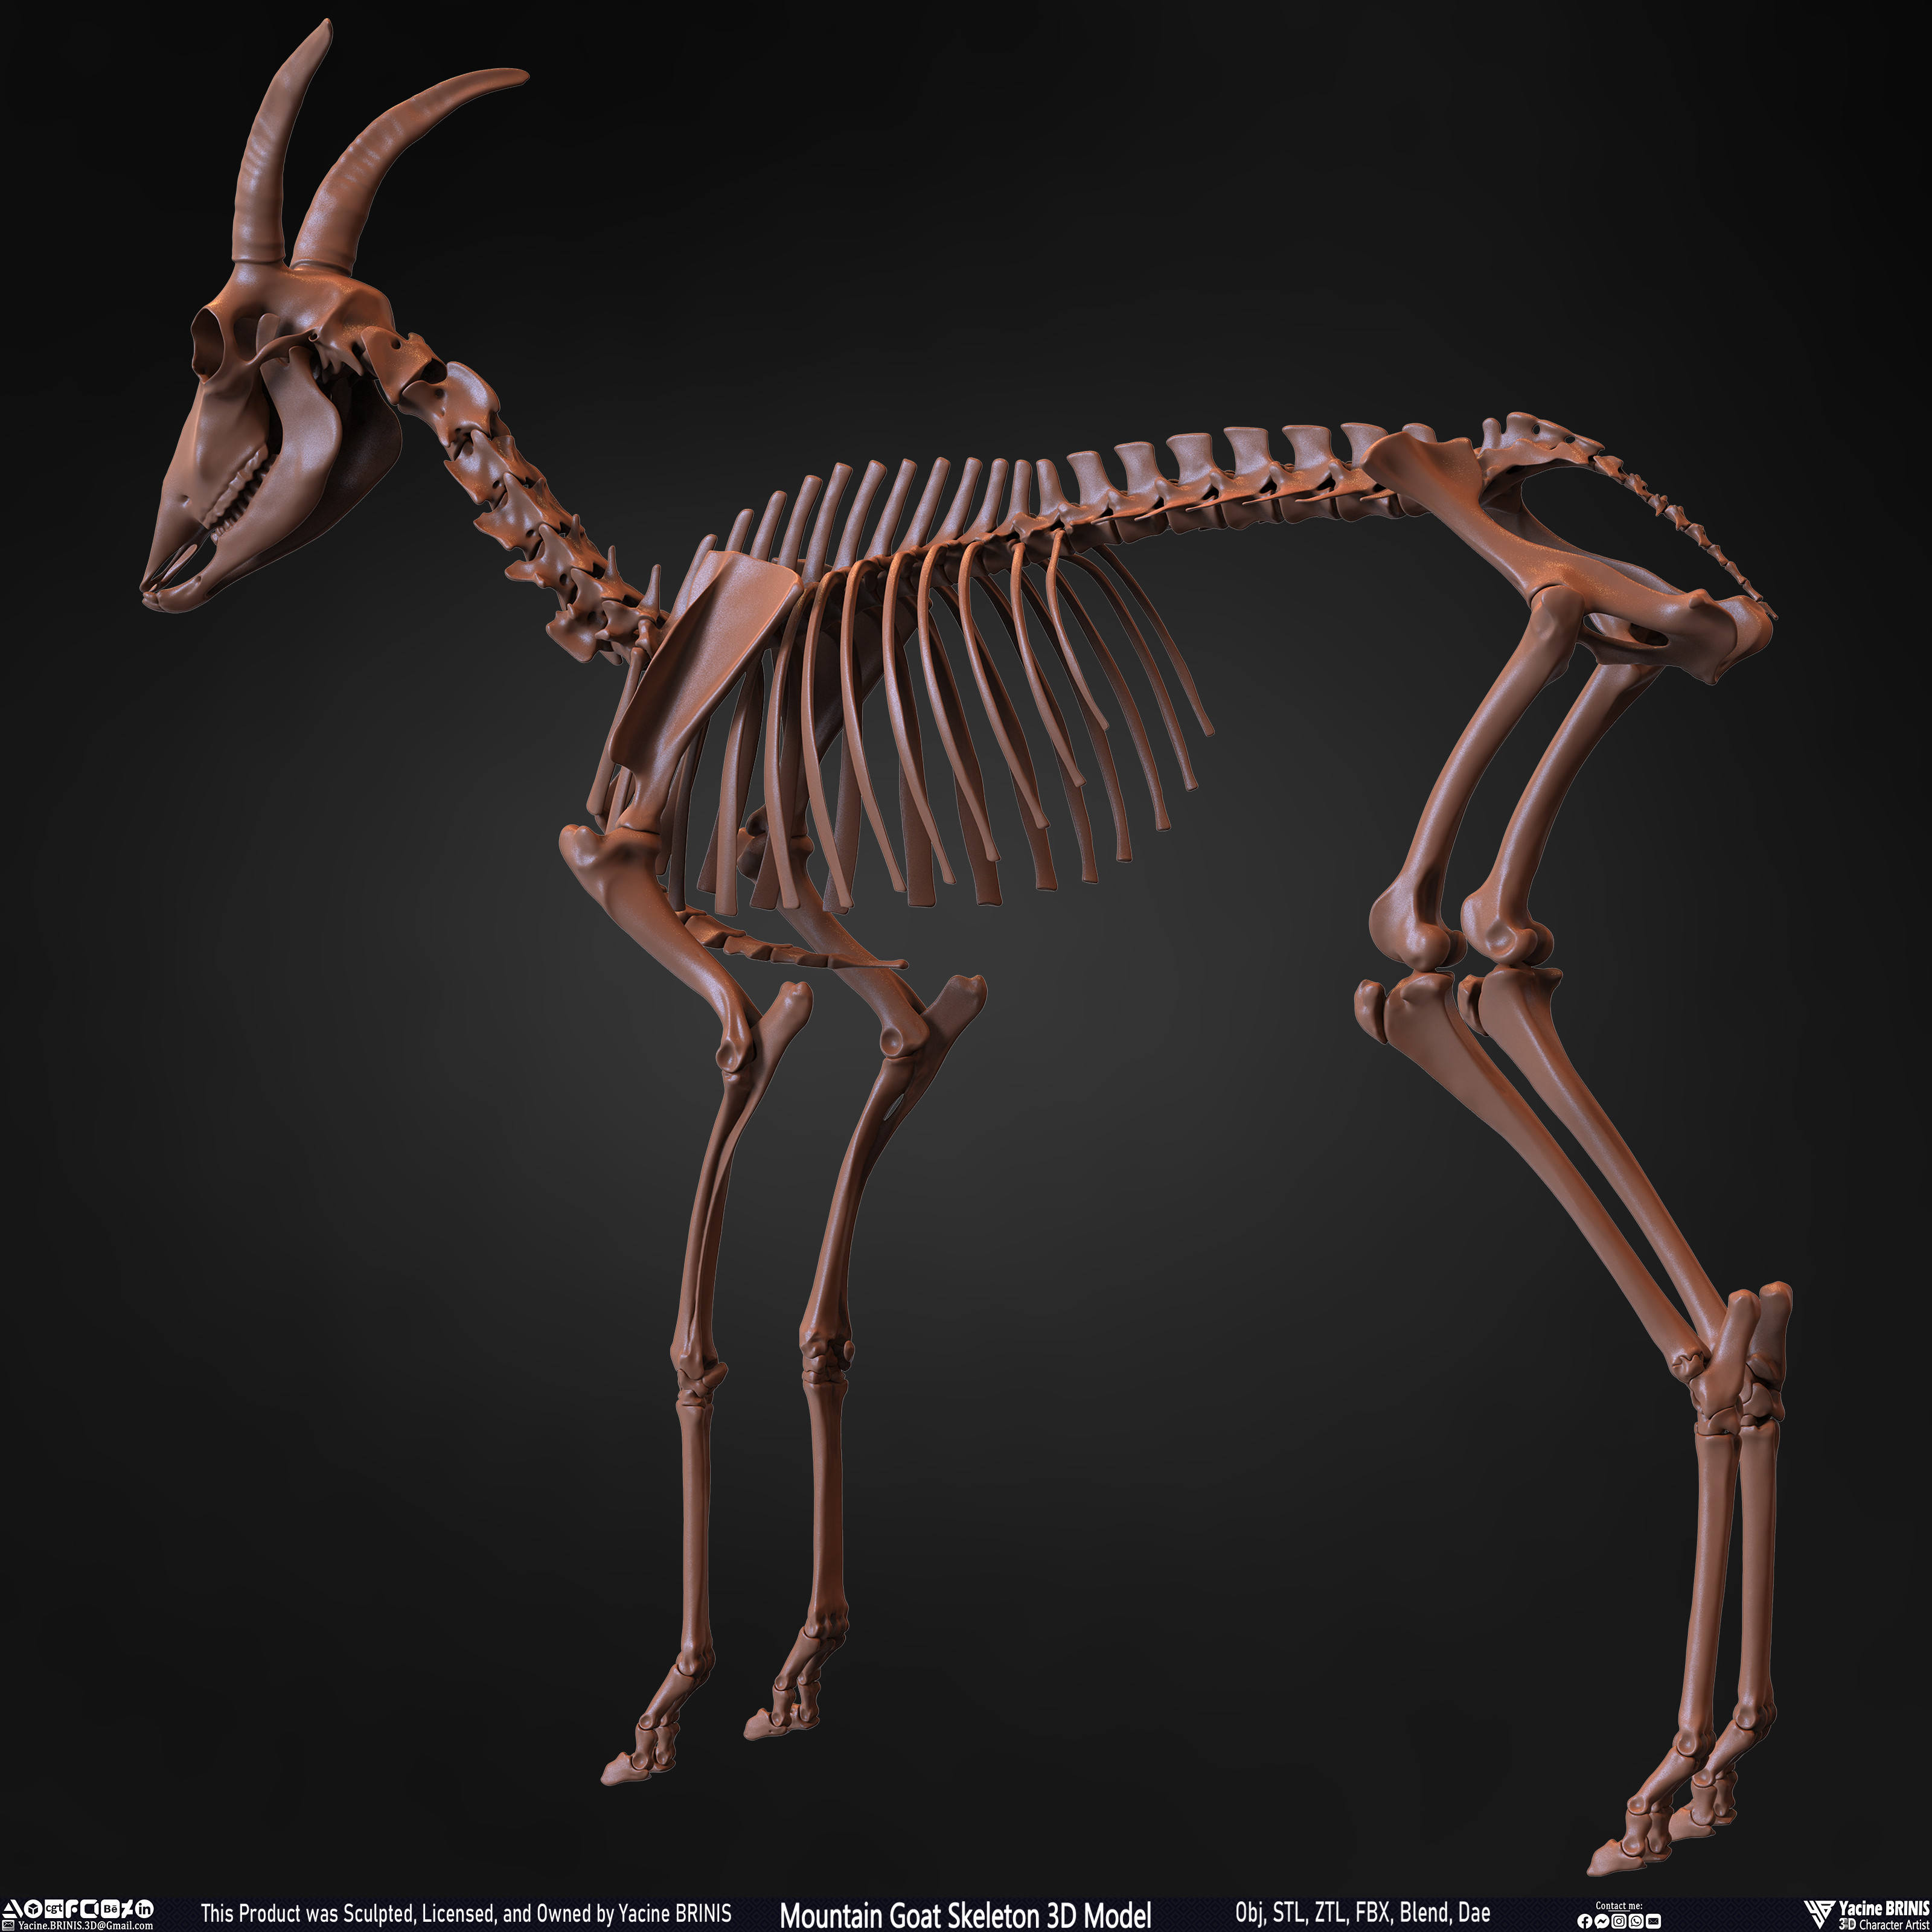 Mountain Goat Skeleton 3D Model Sculpted by Yacine BRINIS Set 012